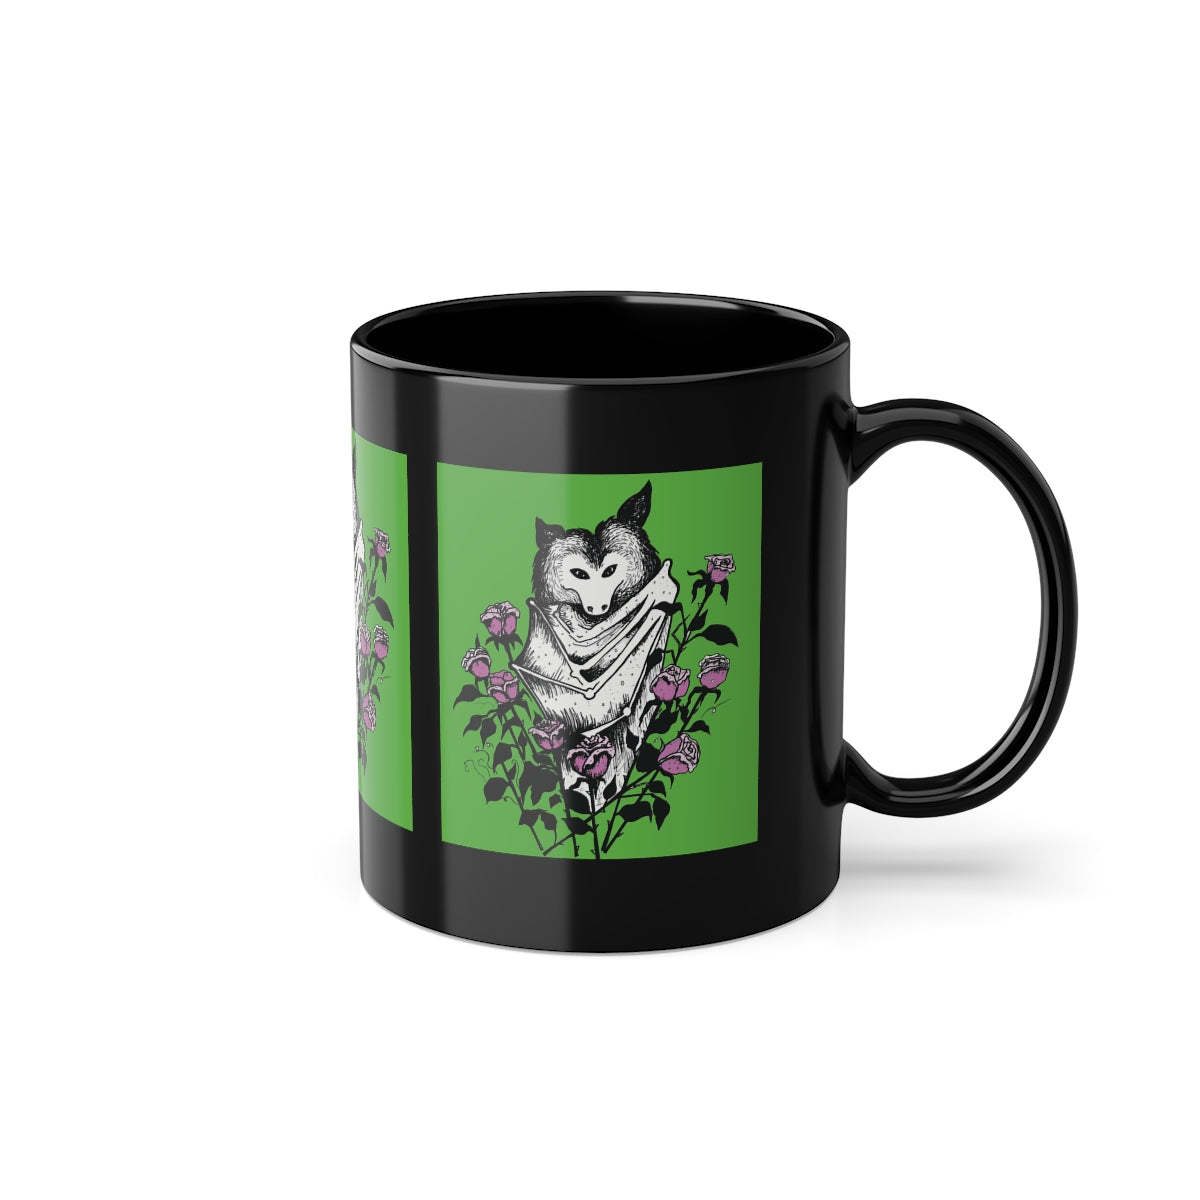 Illustrated Batty Coffee Mug